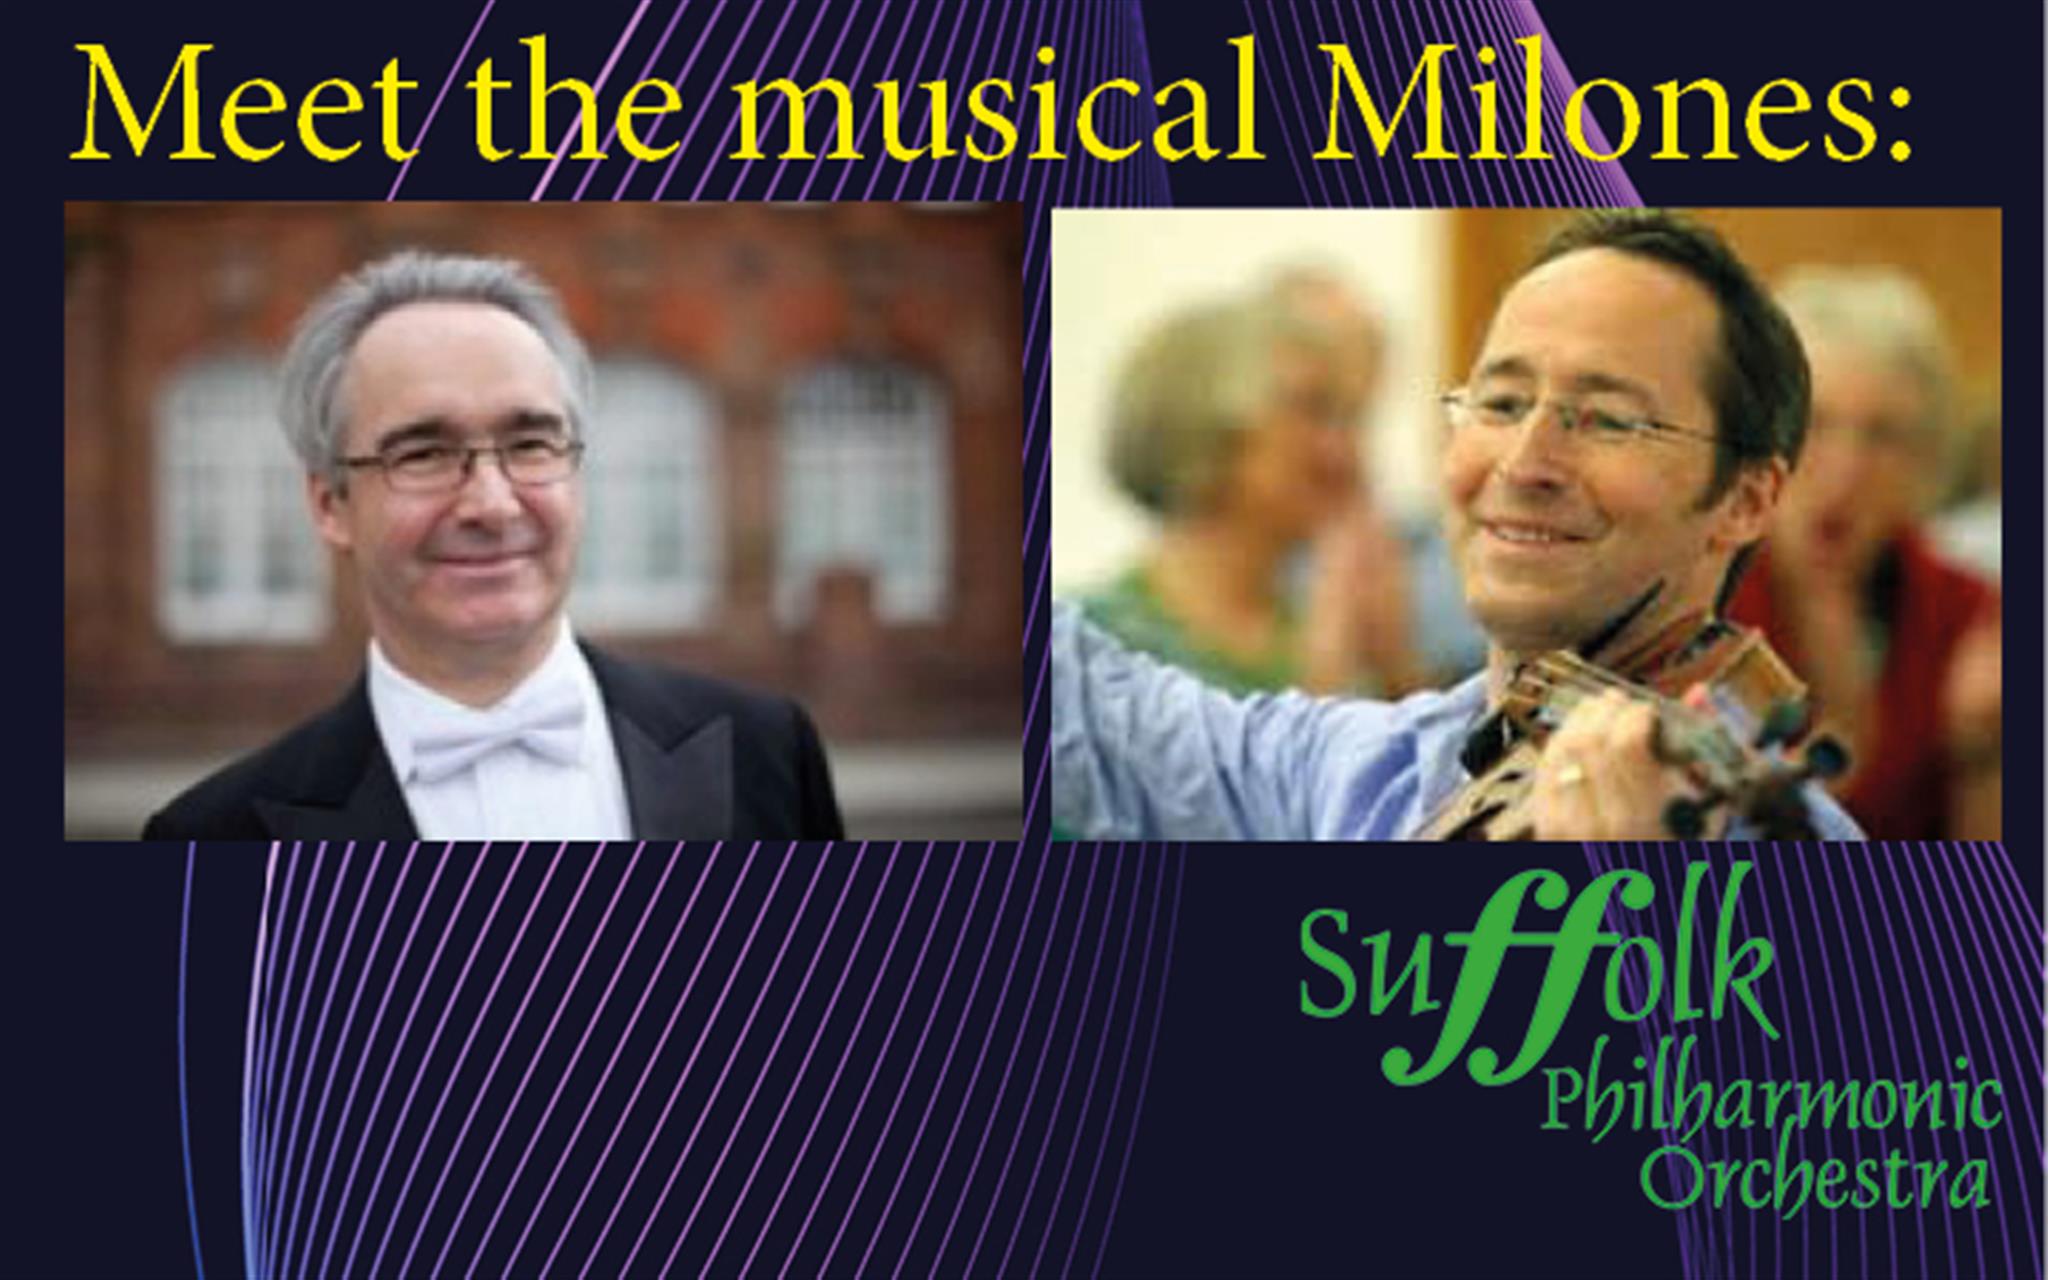 Meet the Musical Milones image